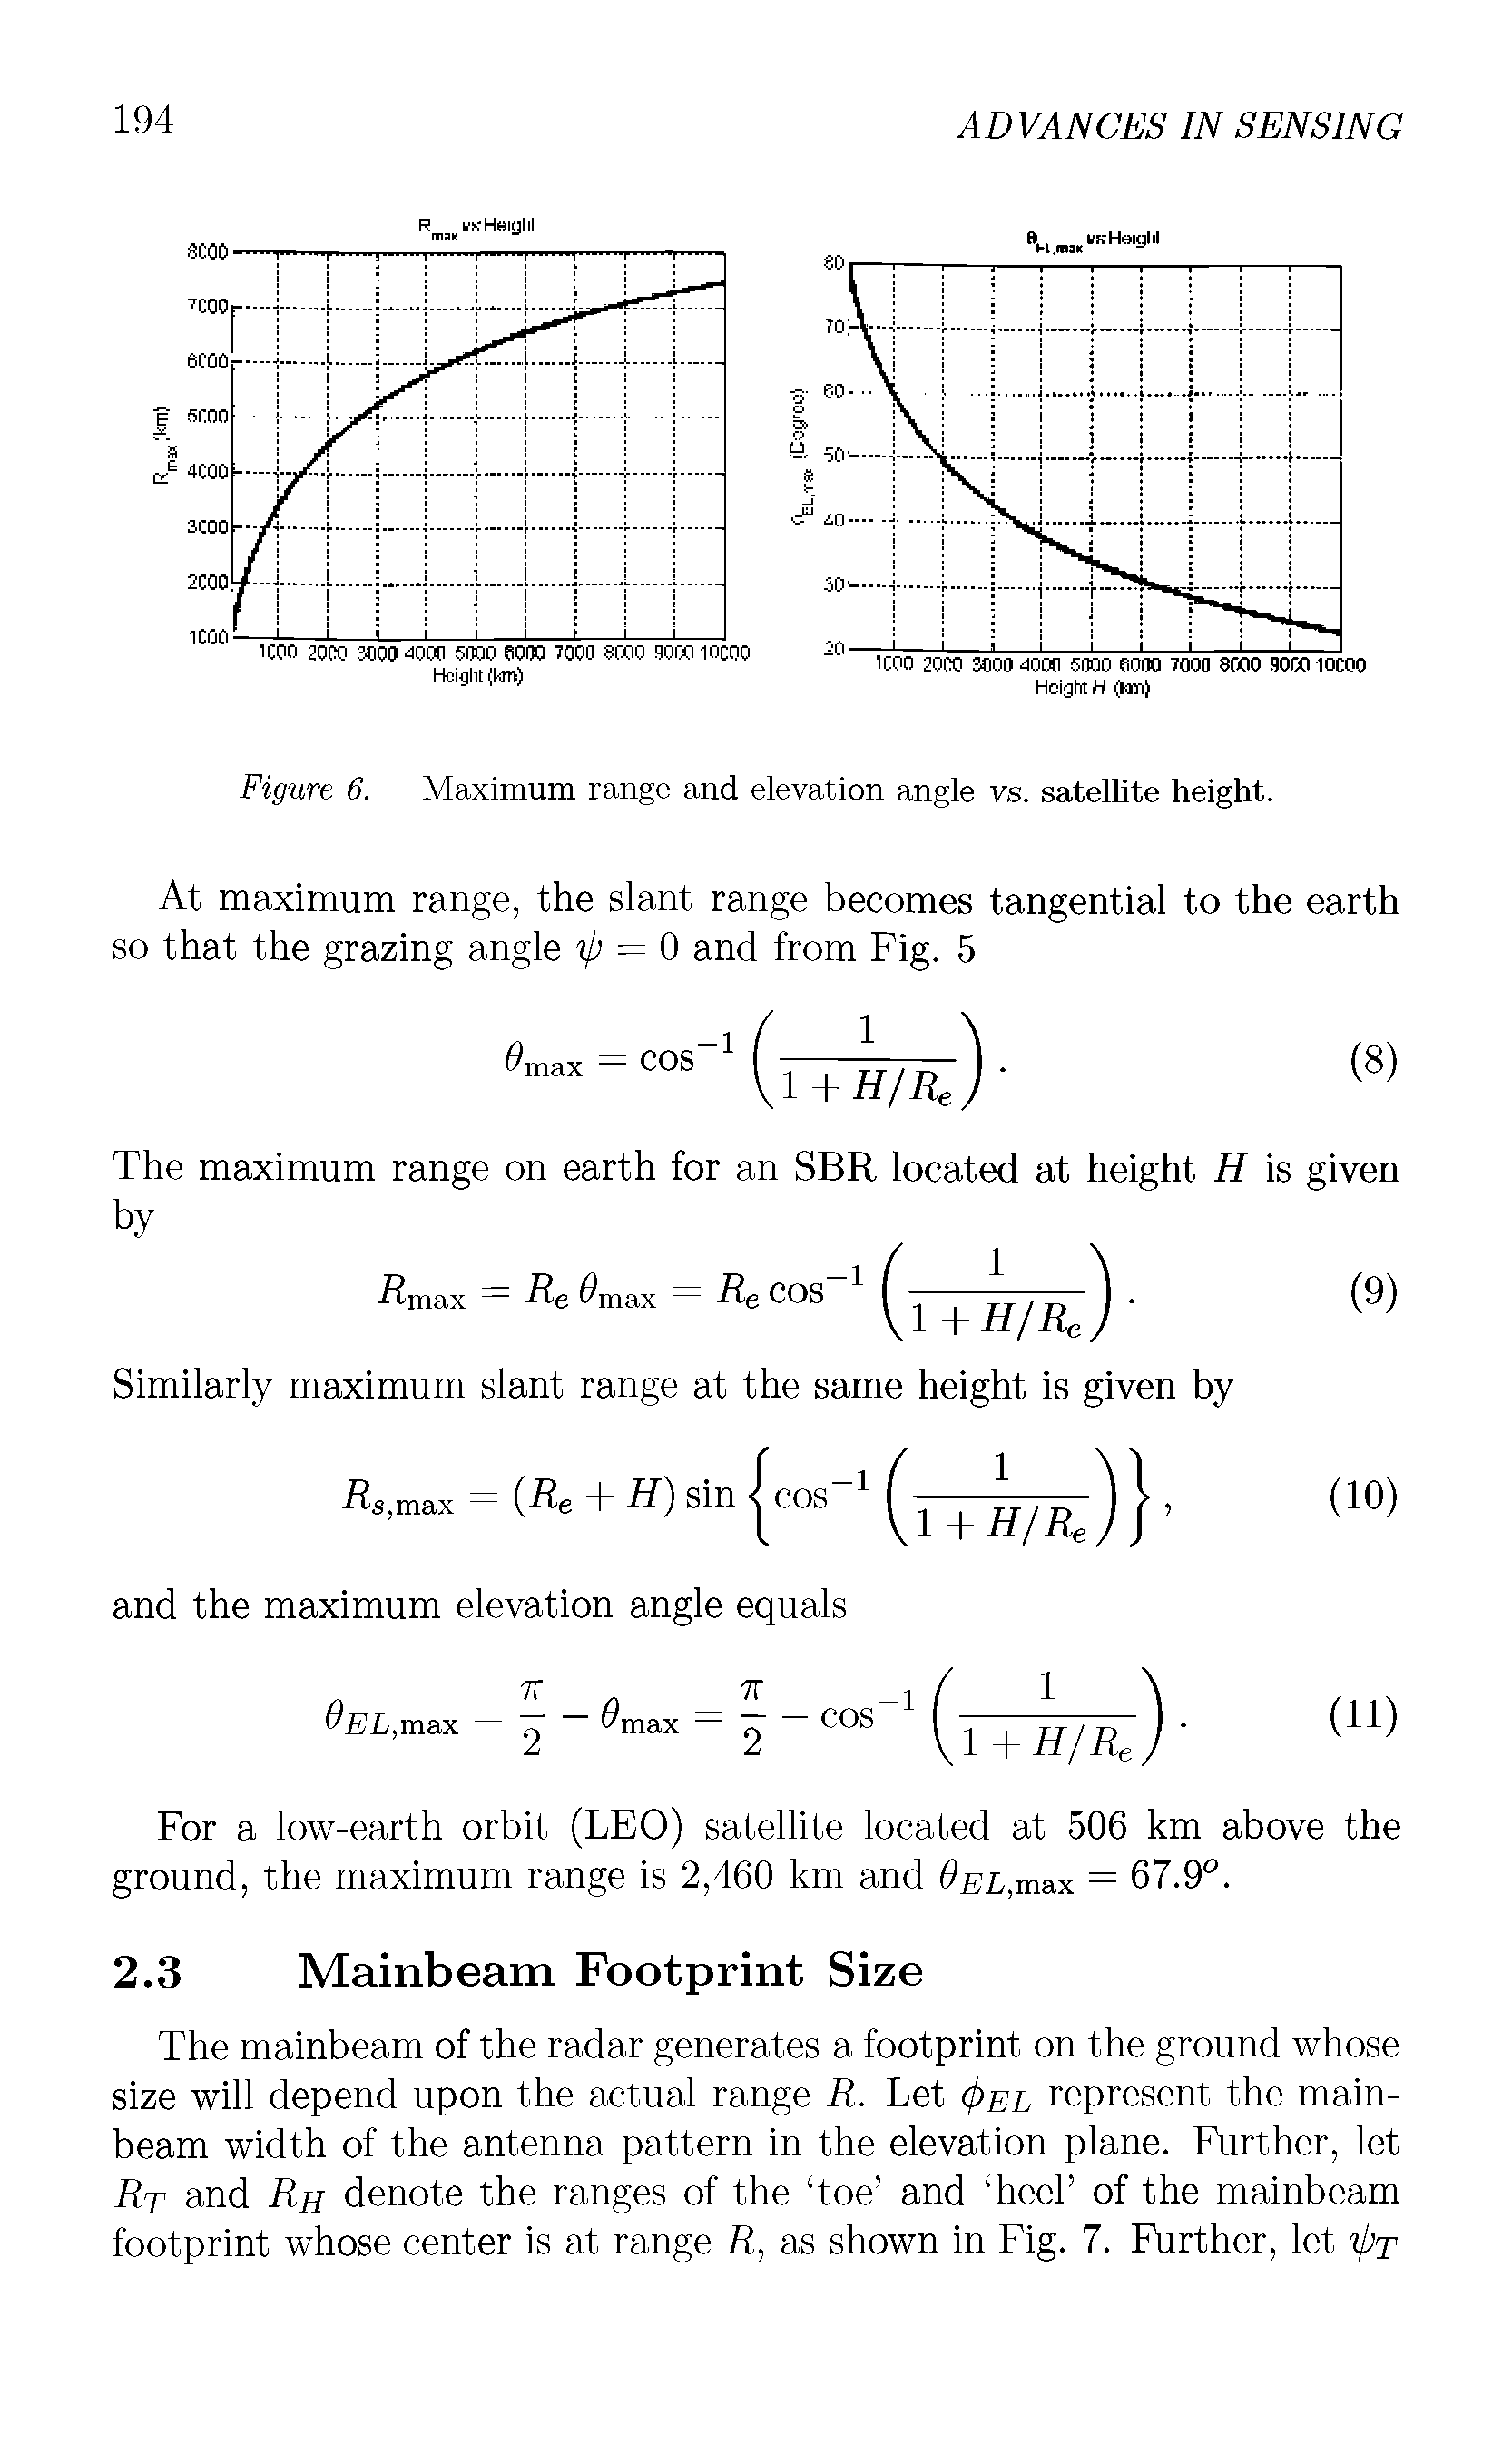 Figure 6. Maximum range and elevation angle vs. satellite height.